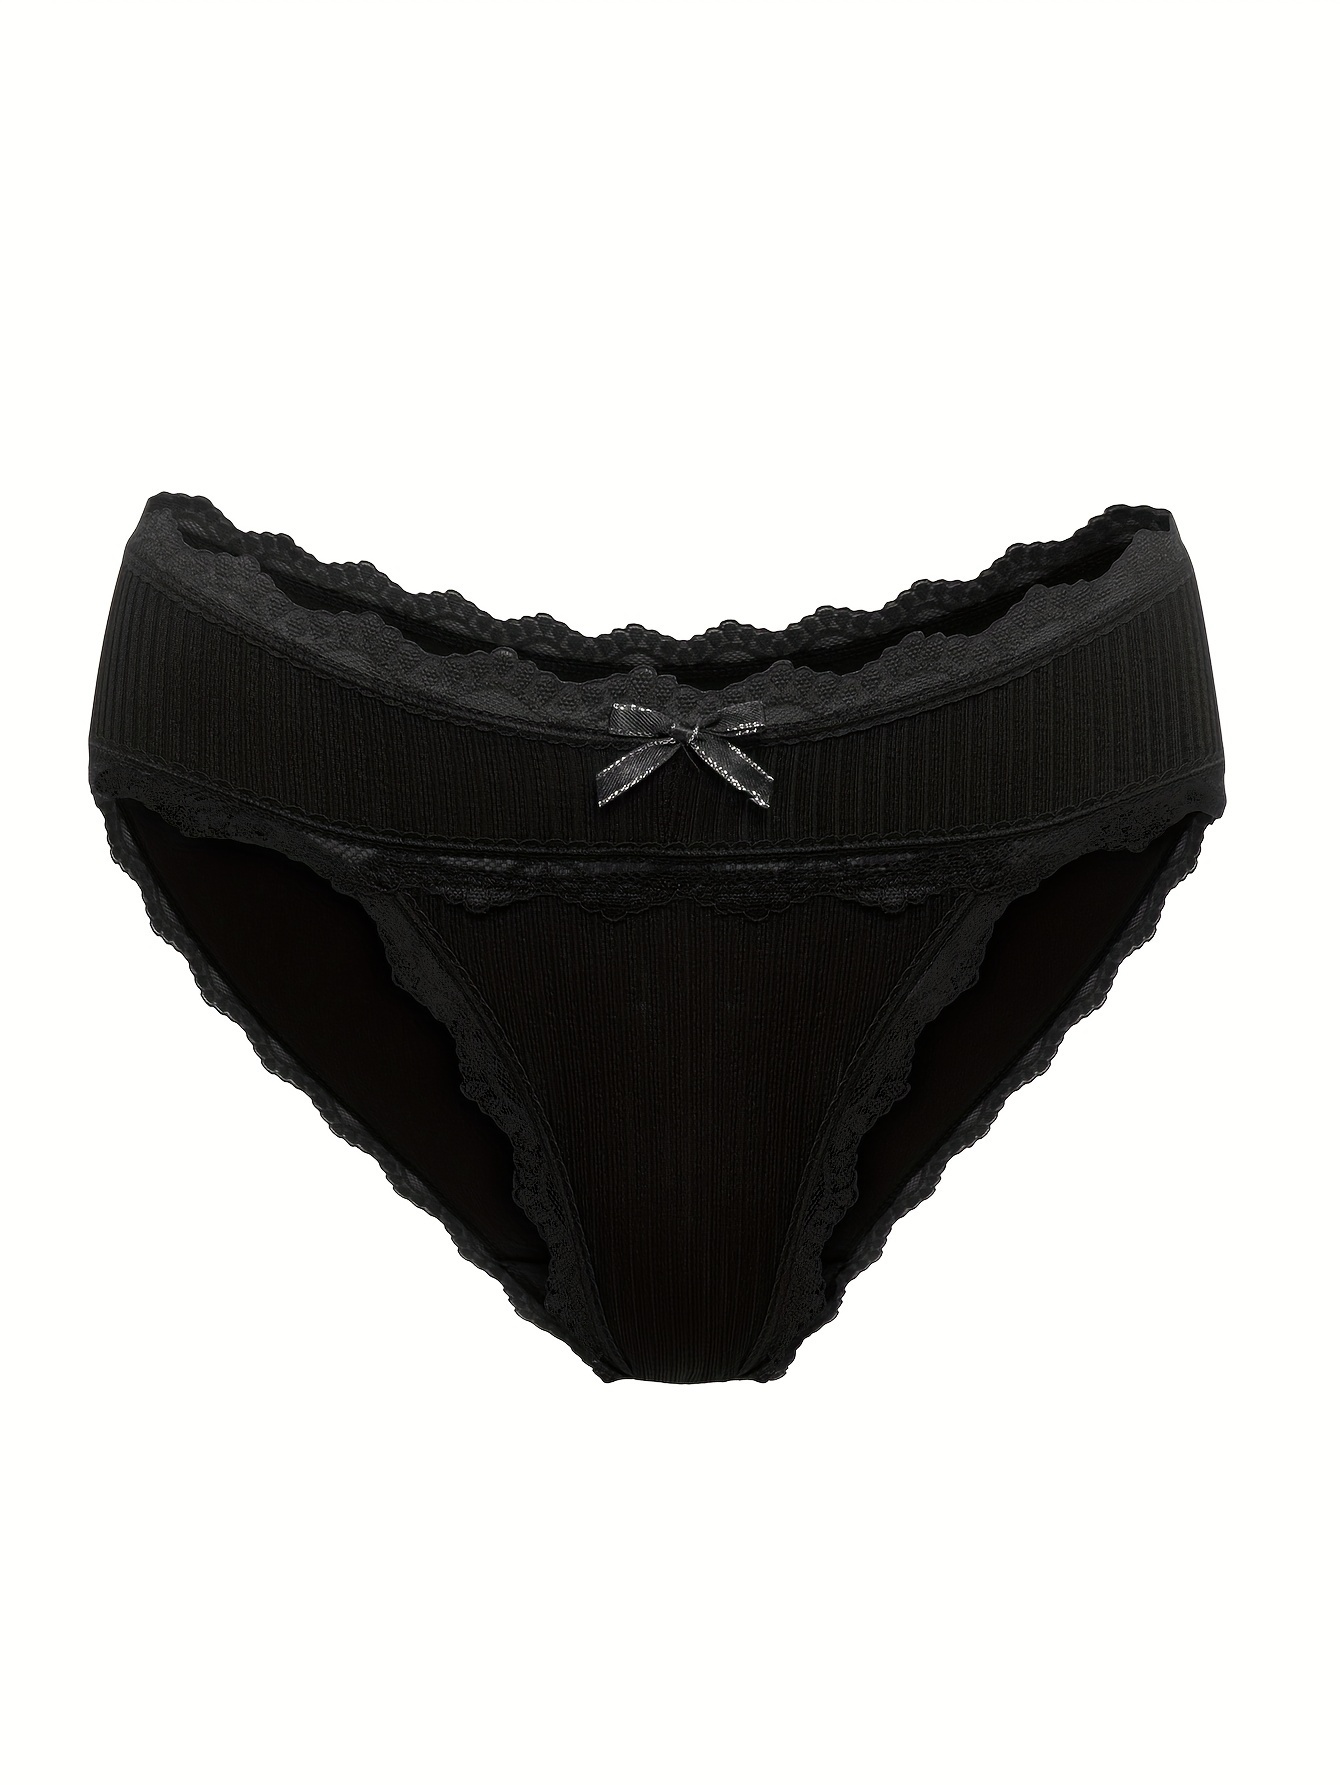 Sexy Underwear, Blacked Panties, Black Lace Panties, Black Thong